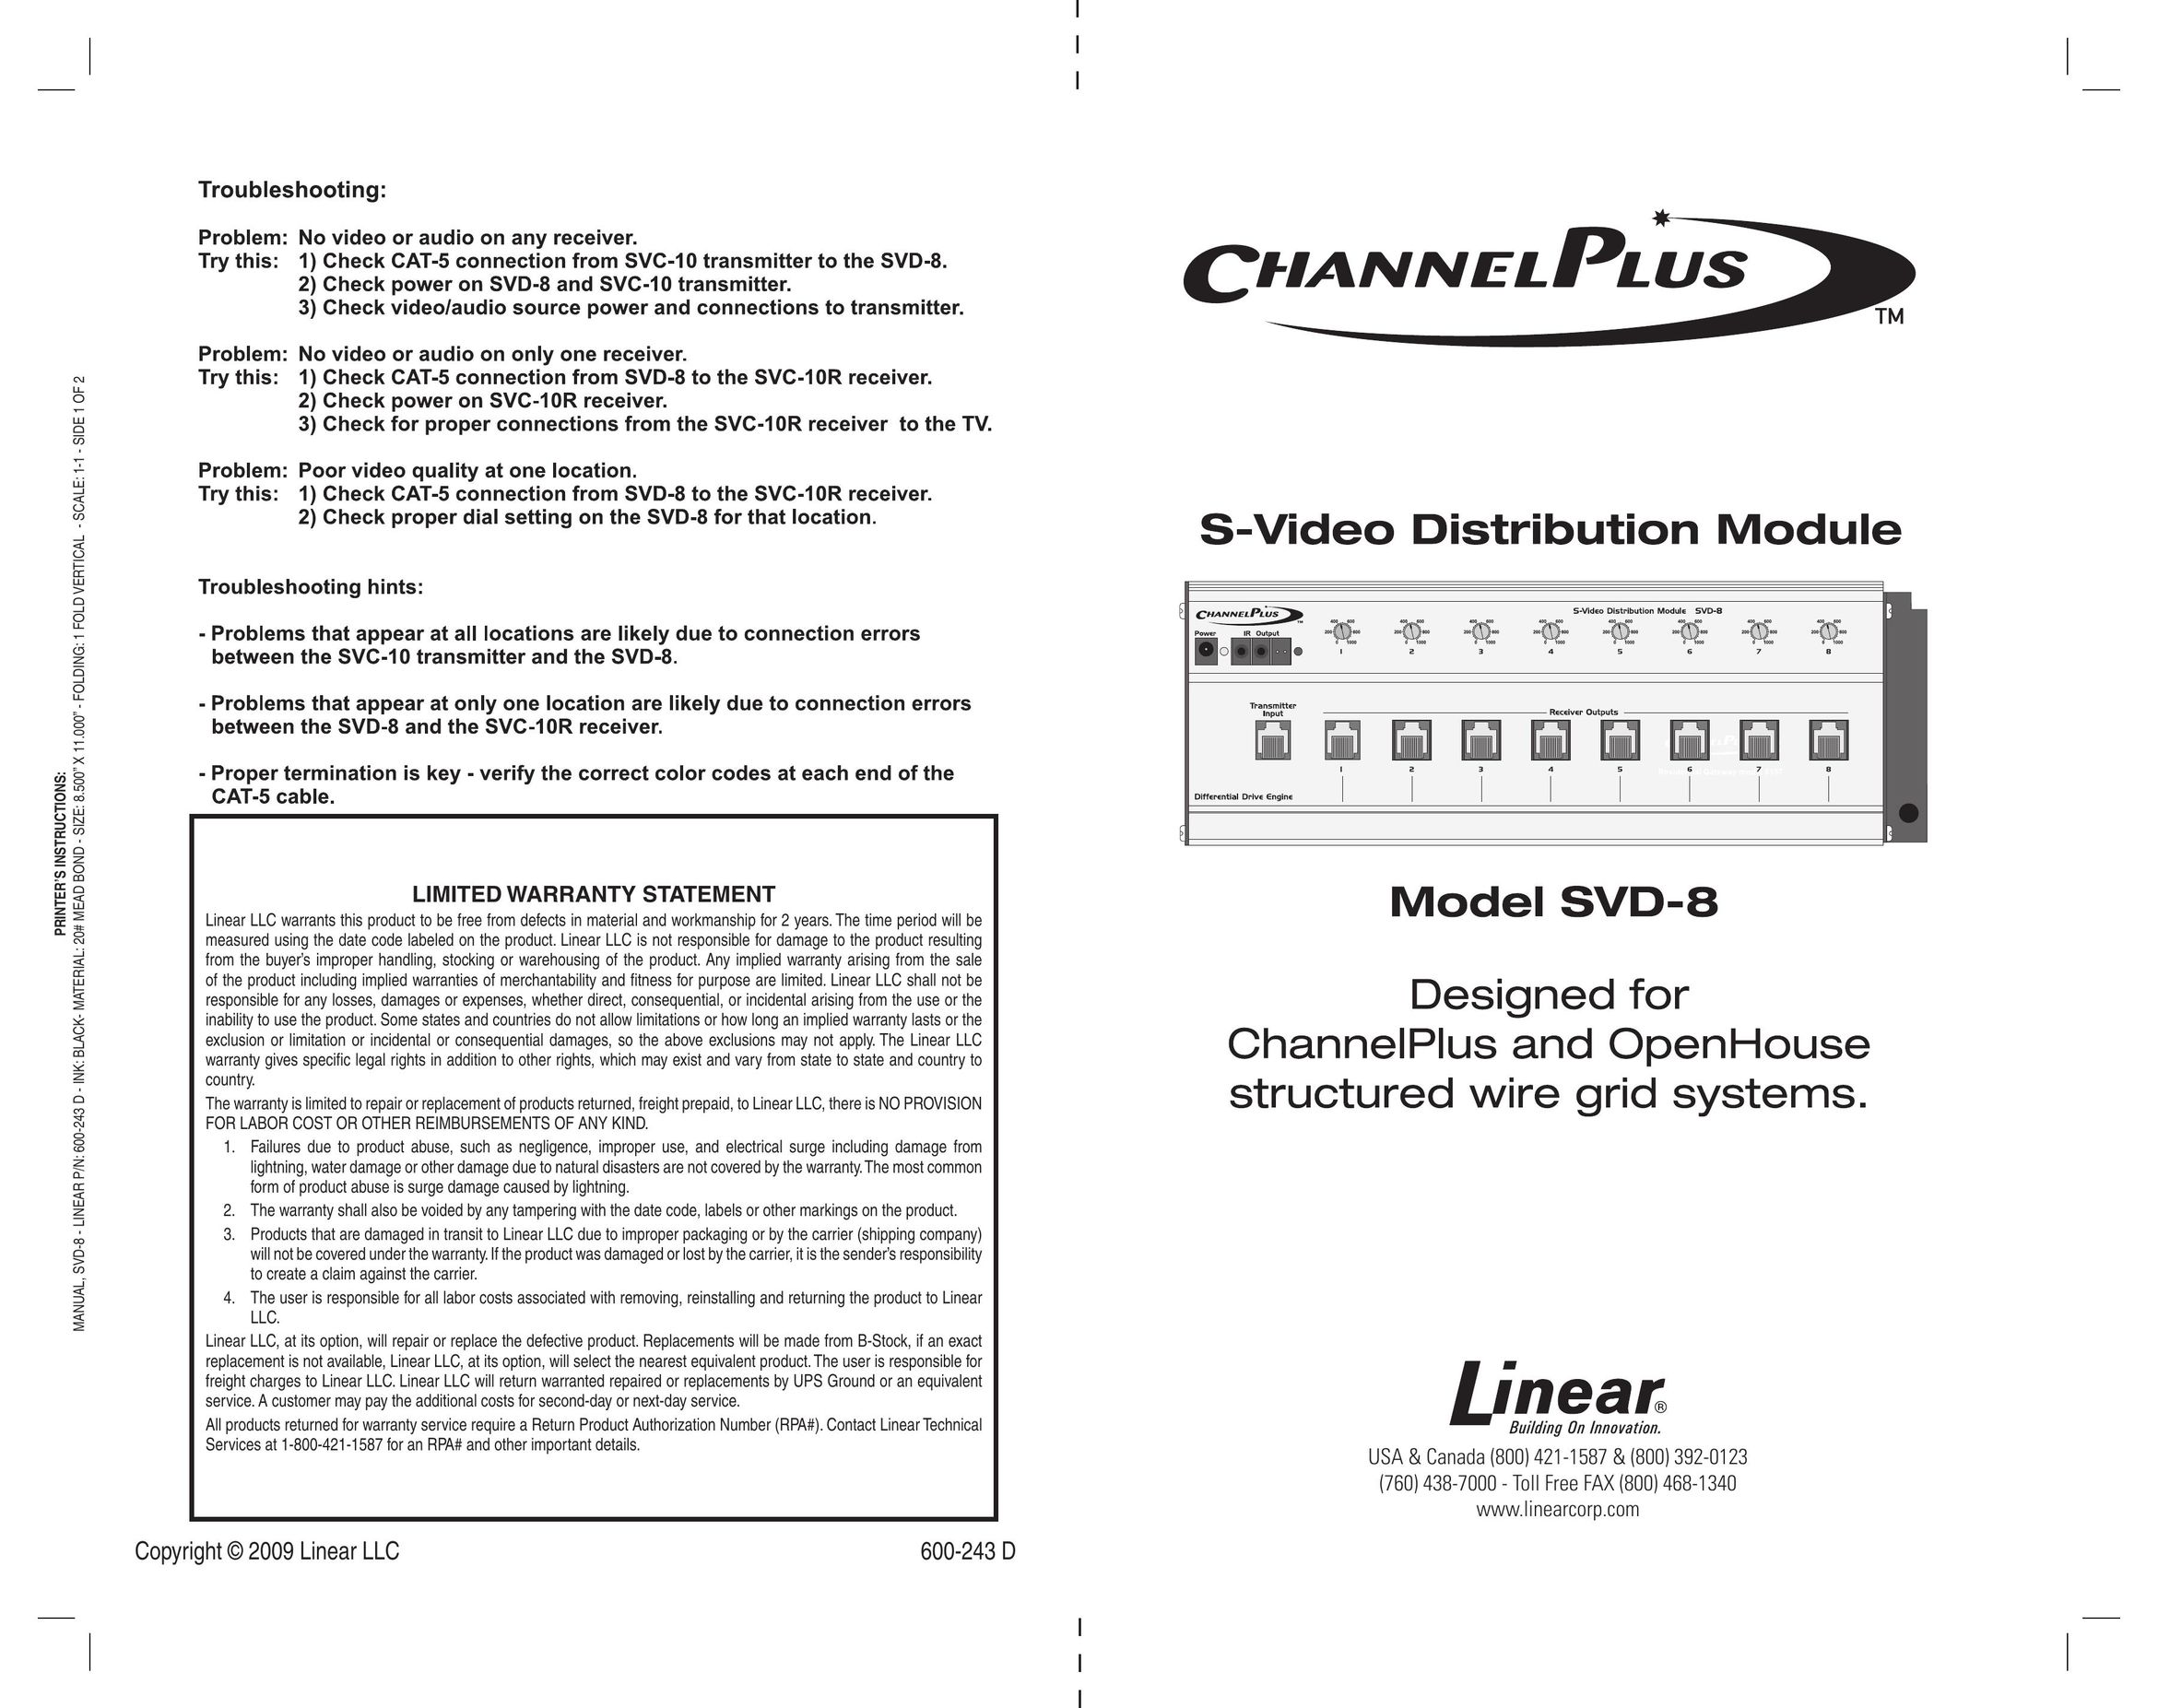 Channel Plus SVD-8 Satellite TV System User Manual